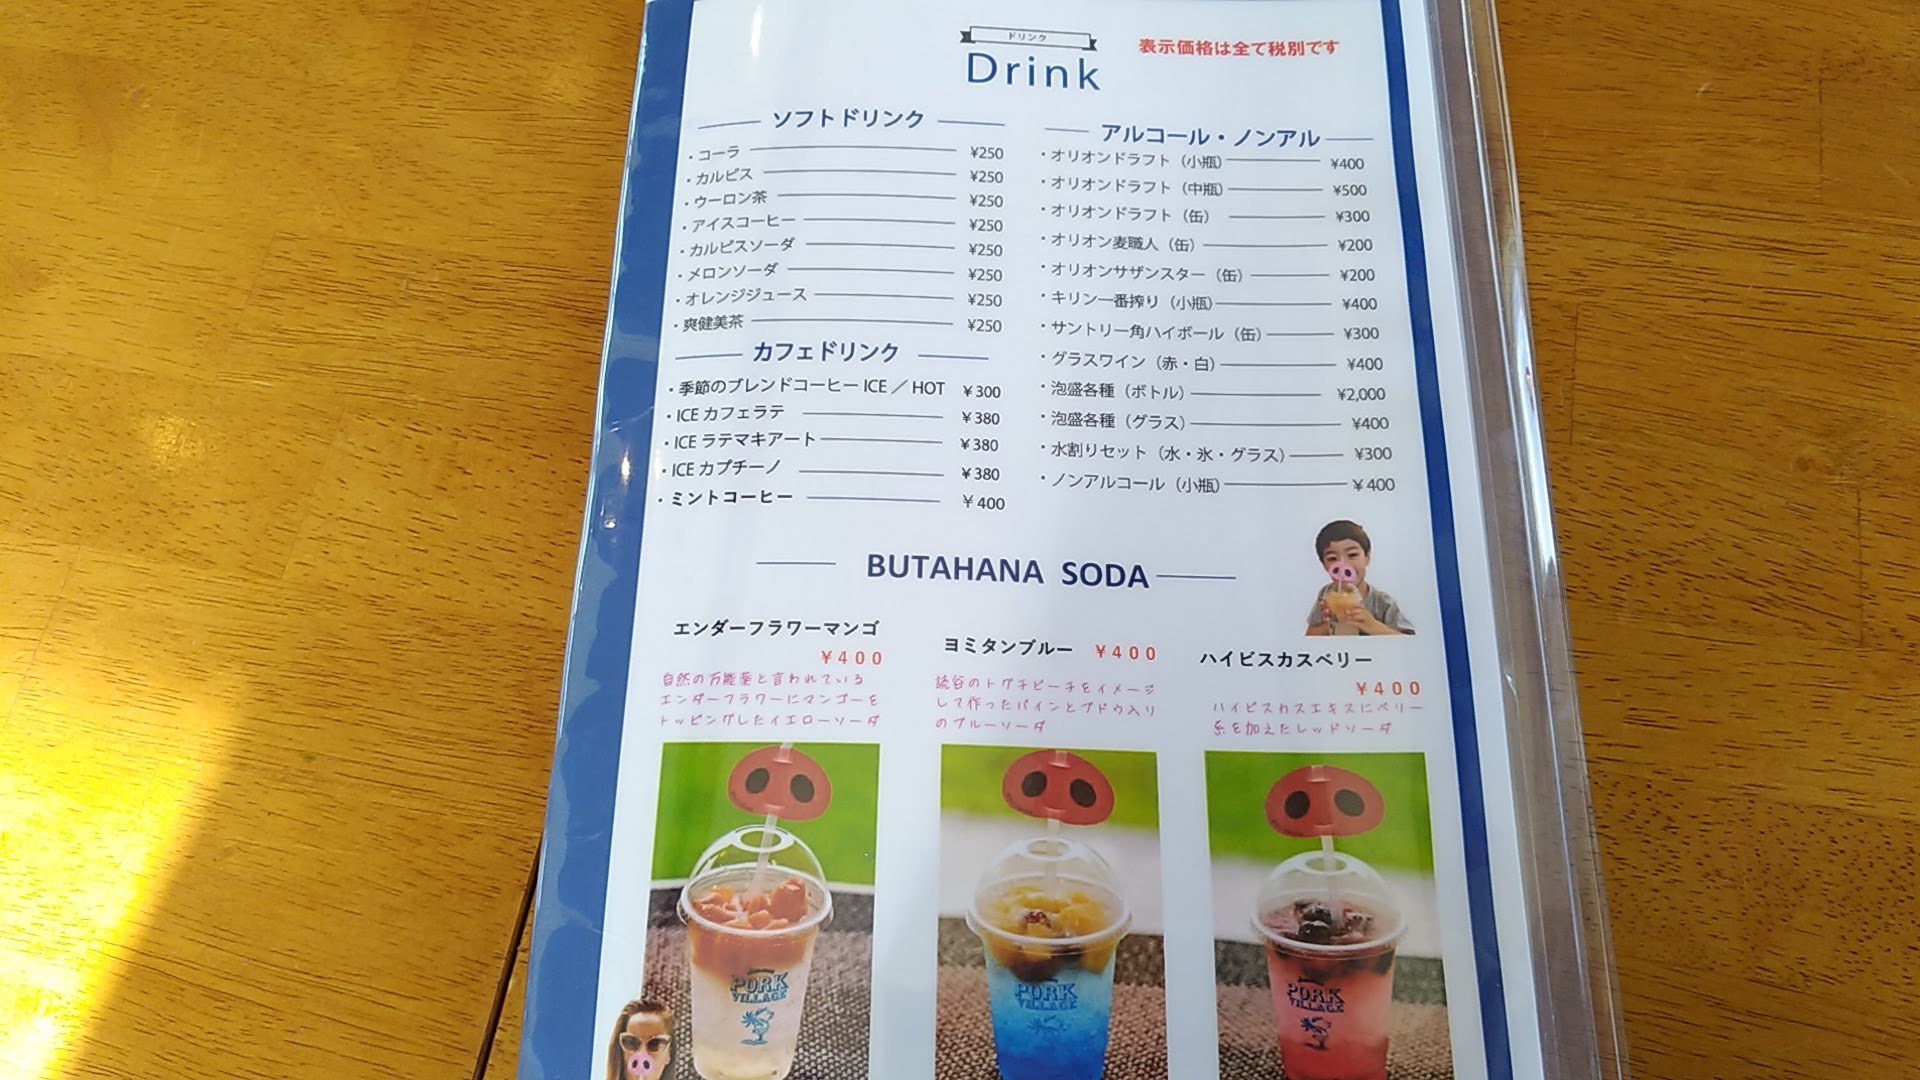 the drink menu of Okinawa pork village